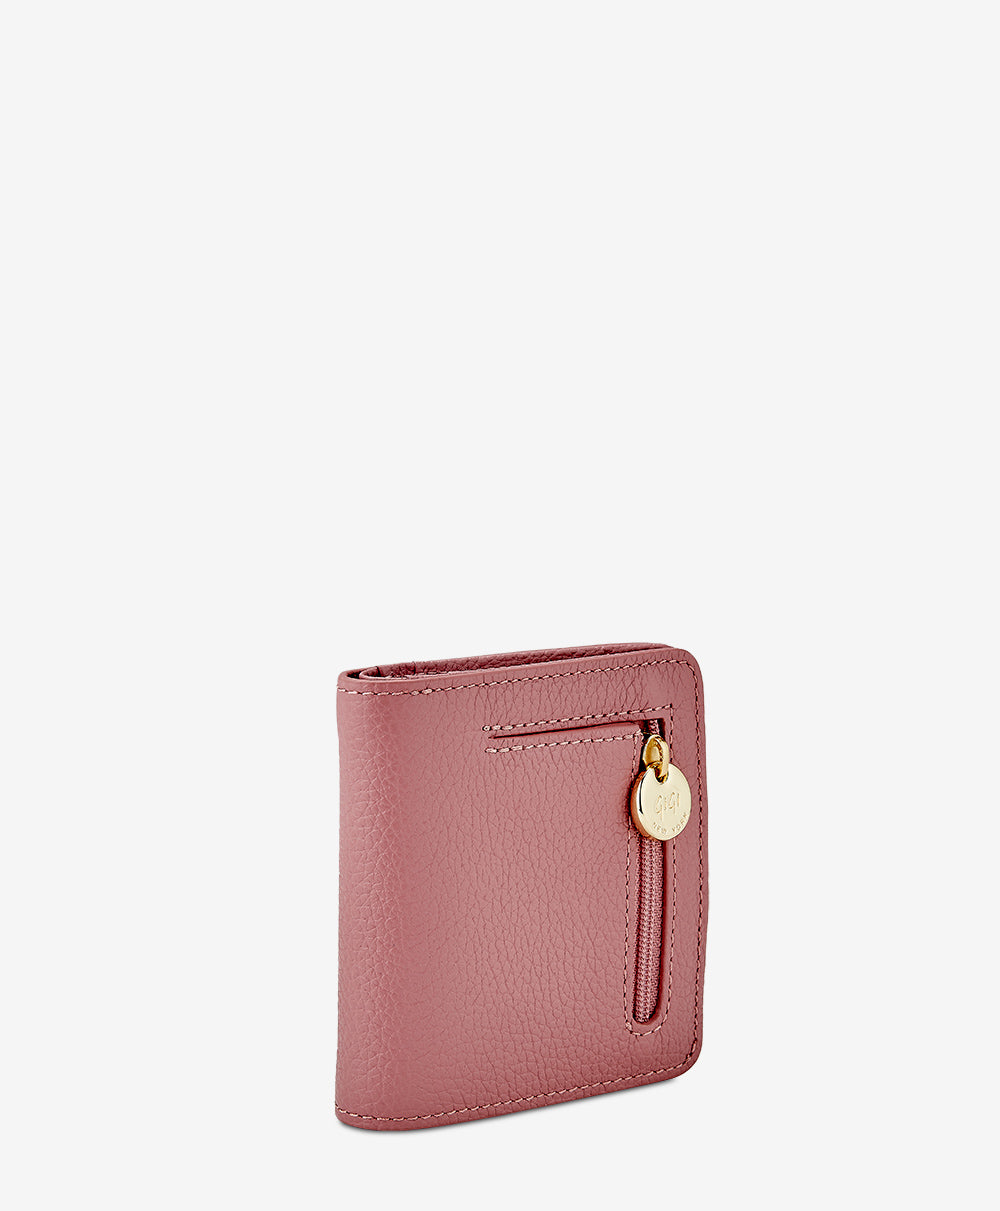 Mini Foldover Wallet  Rose Pebble Grain Leather